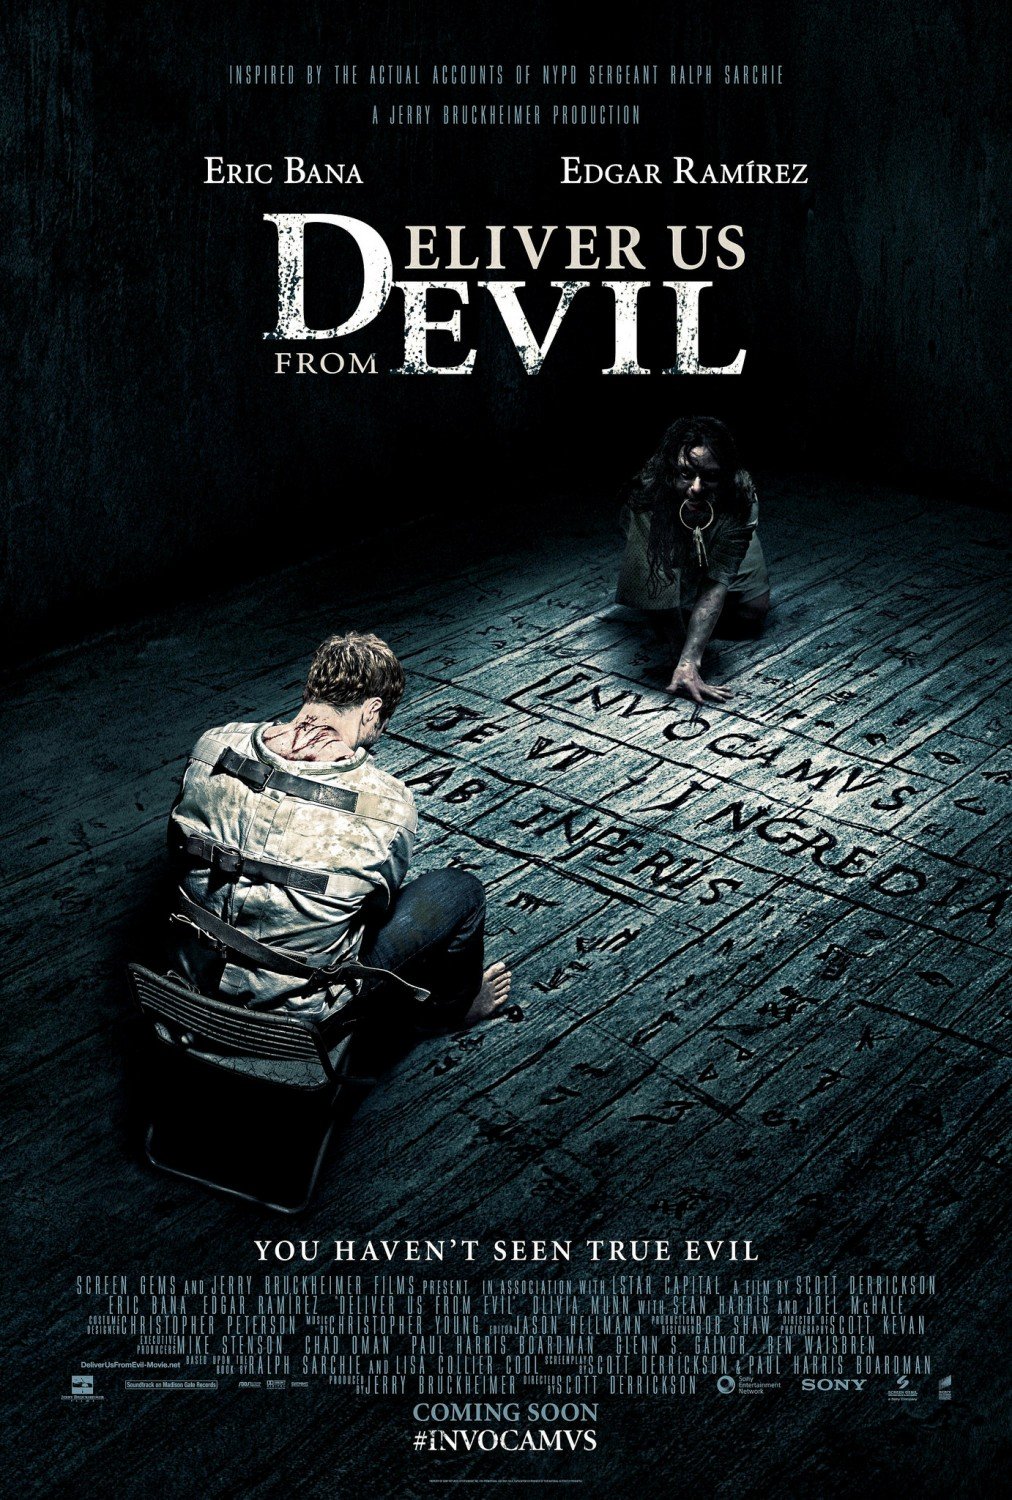 Deliver Us from Evil (2014) ล่าท้าอสูรนรก Eric Bana